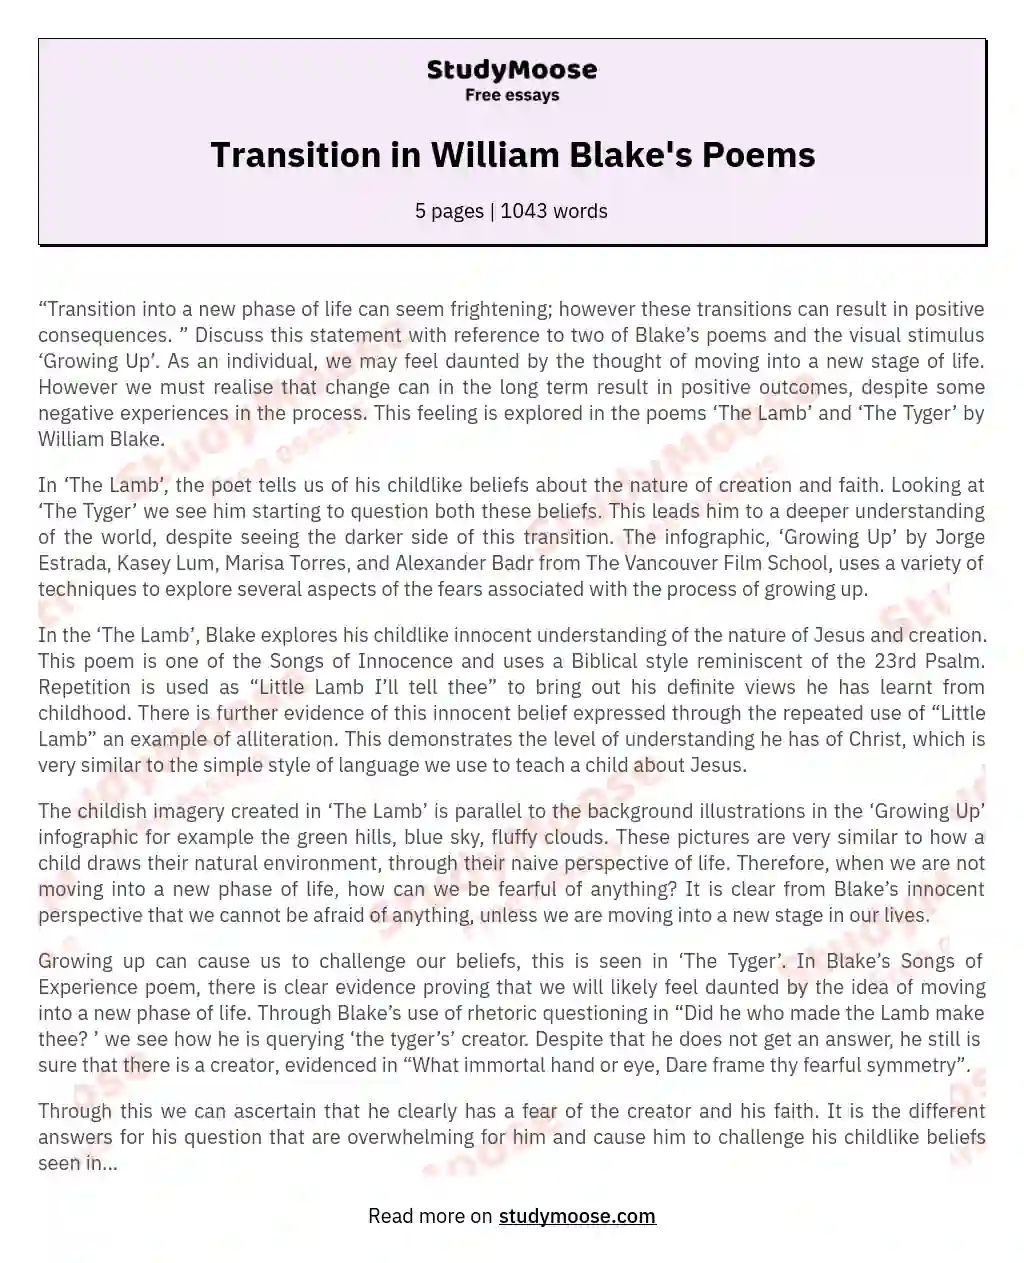 Transition in William Blake's Poems essay